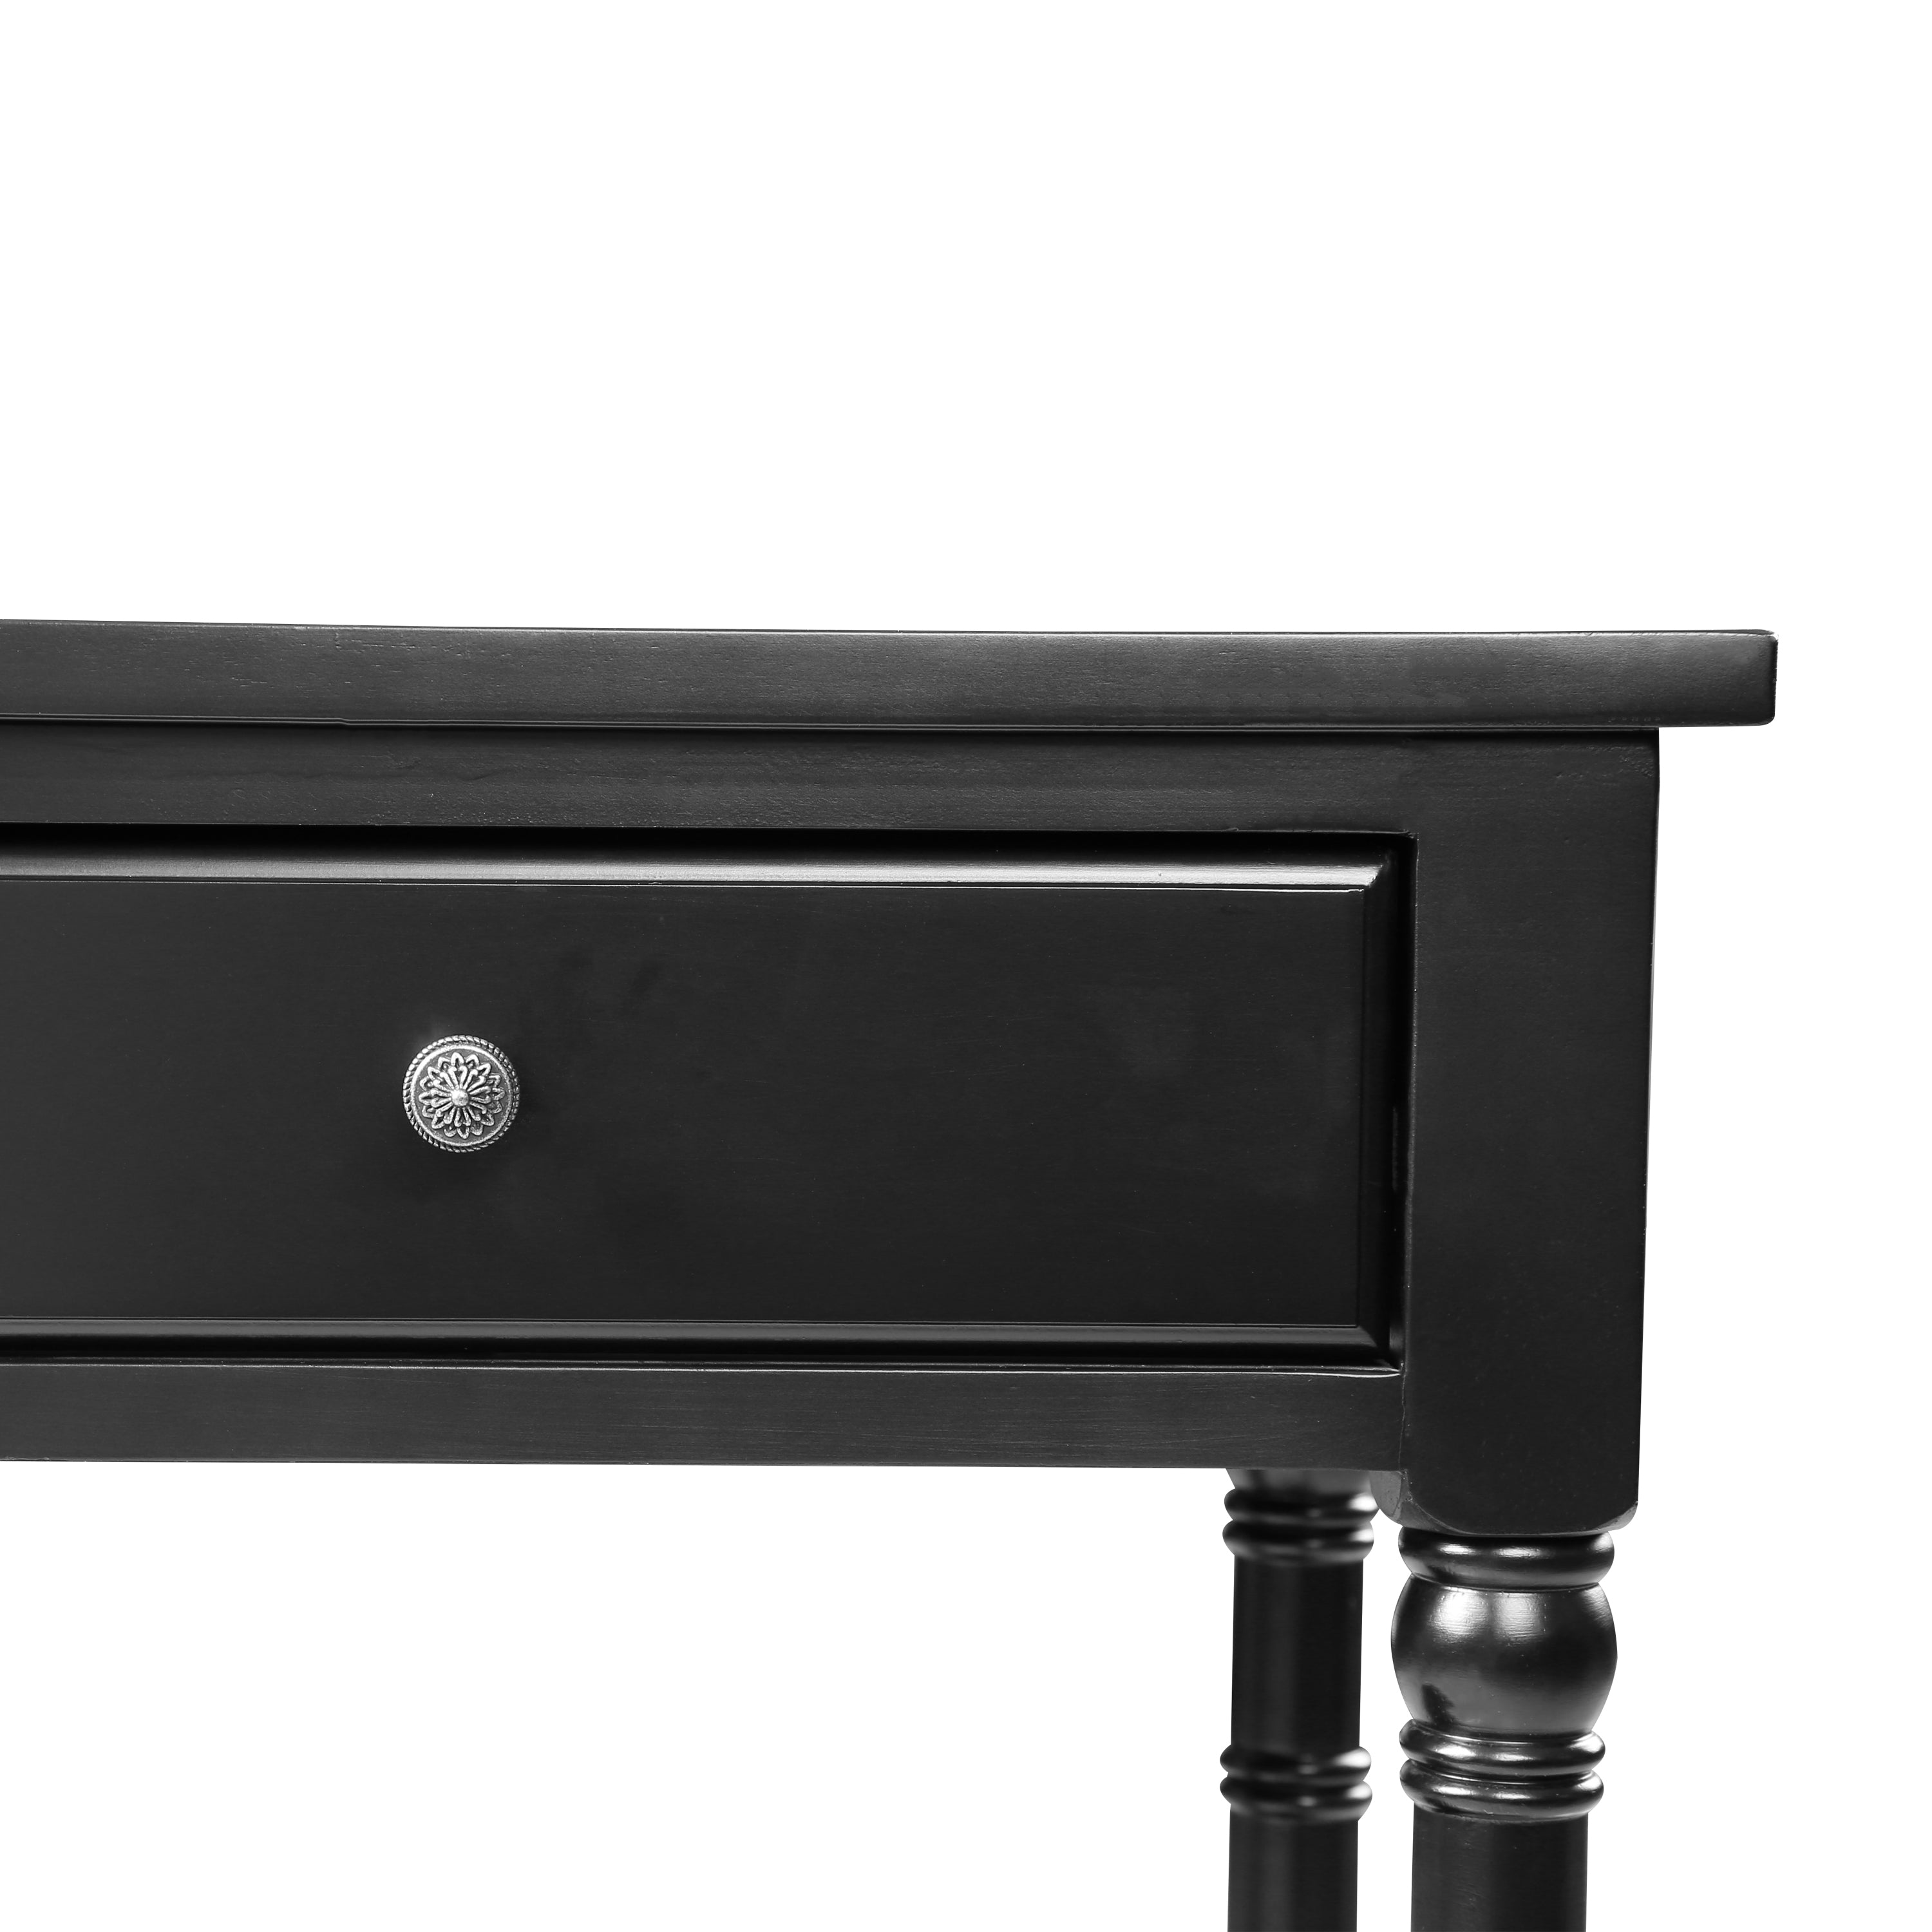 ZNTS American solid wood sofa table SFZ-004-BK